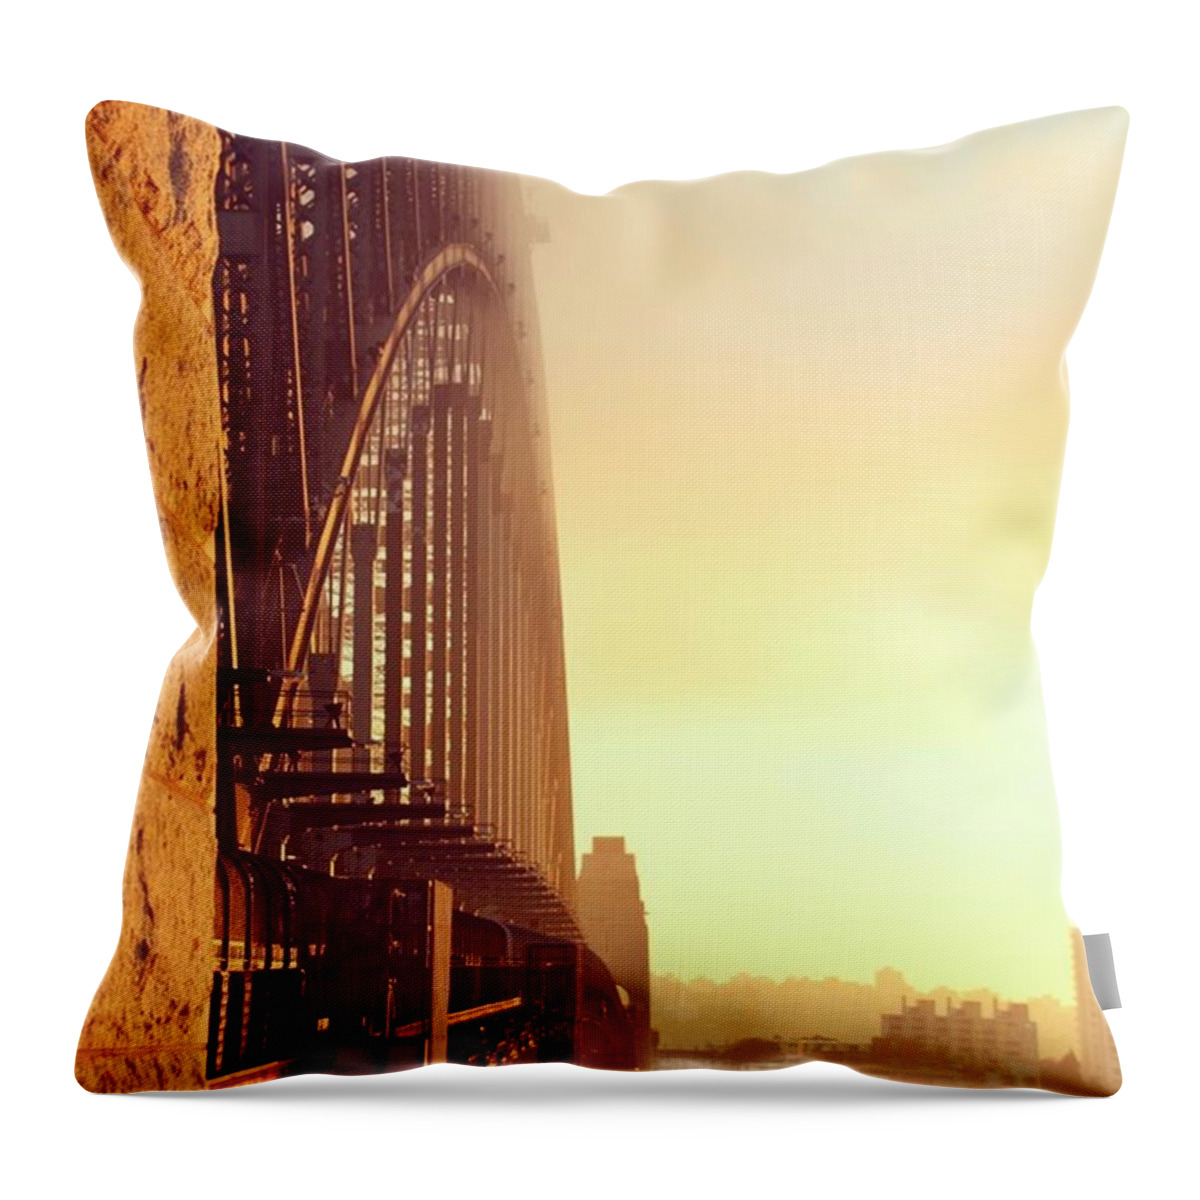 Sydney Harbour Bridge Throw Pillow featuring the photograph Sydney Harbour Bridge by Andrew Hill